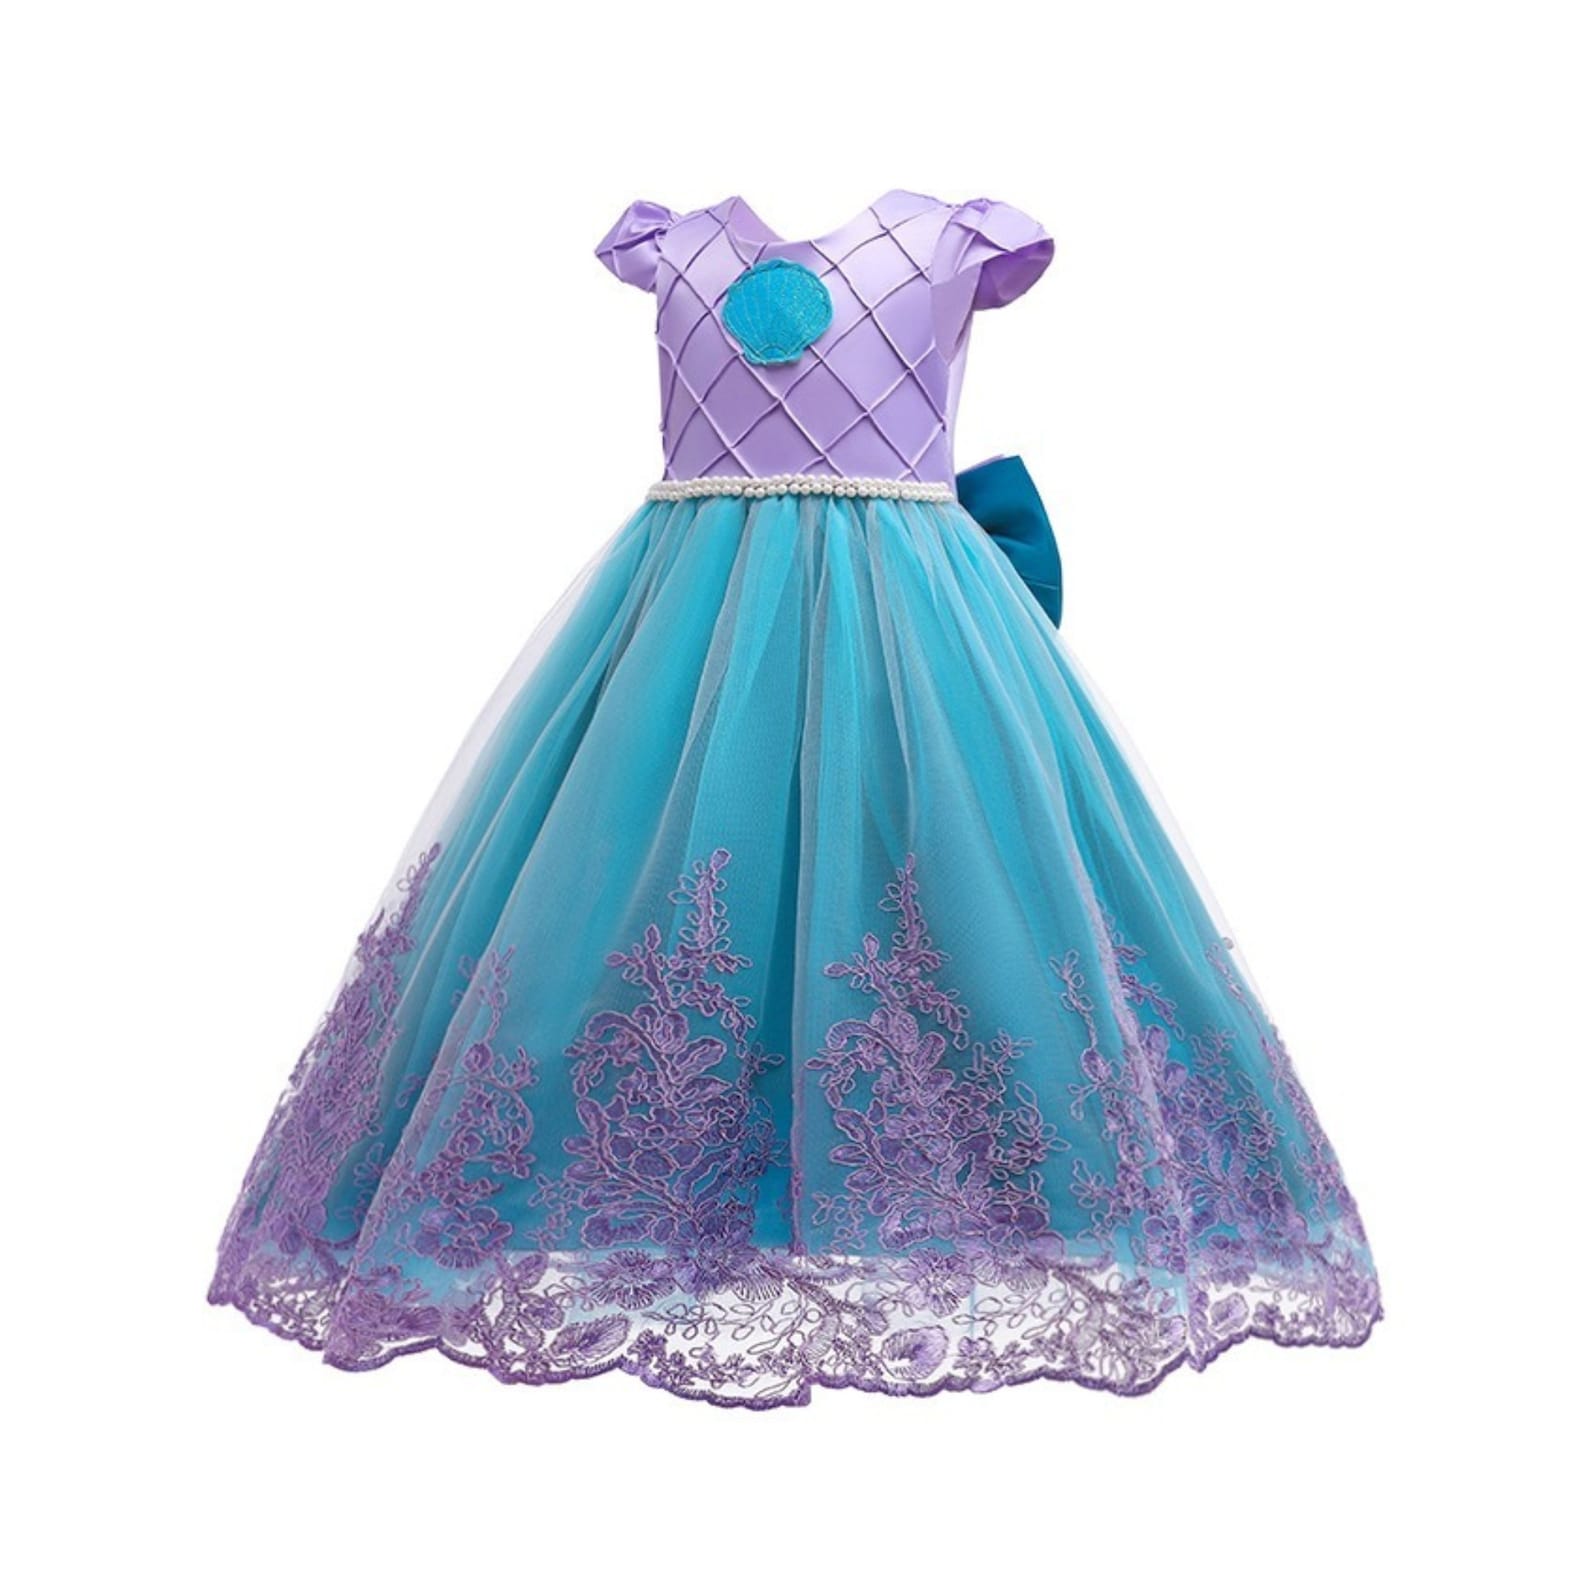 Little Mermaid Ariel dress - The ultimate Disney Inspired Costume